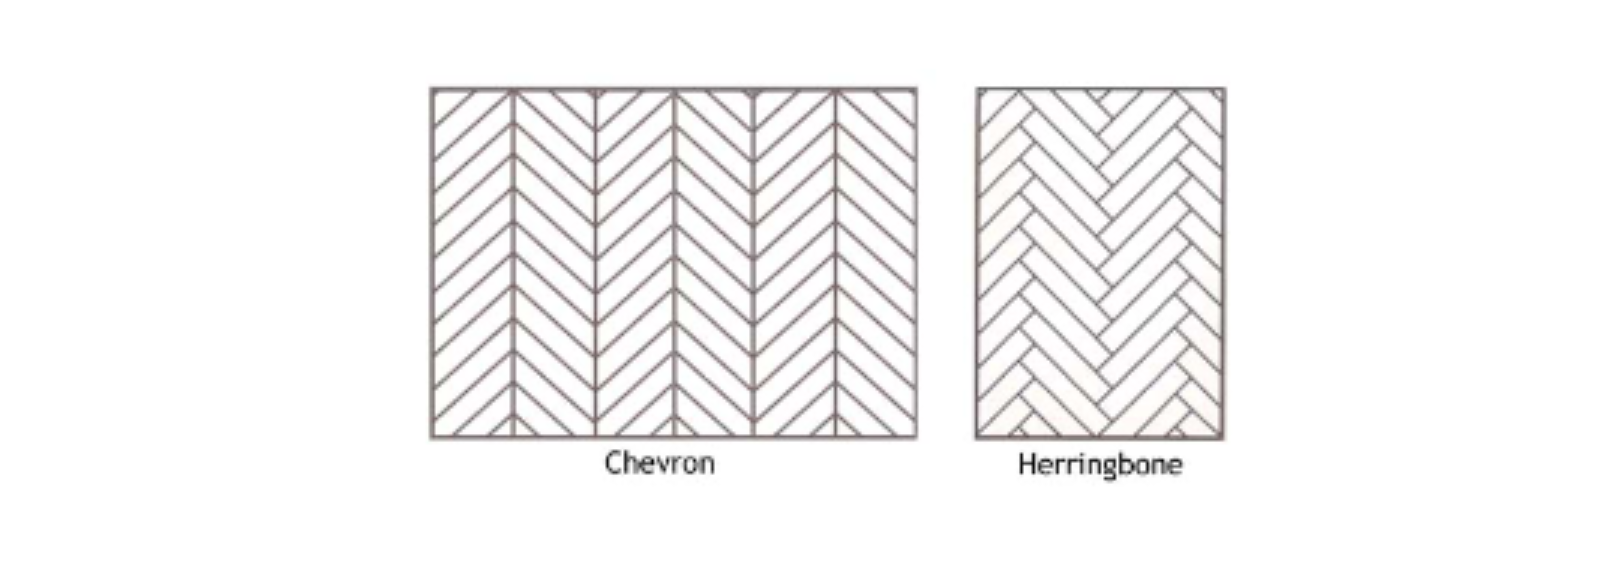 herringbone vs chevron